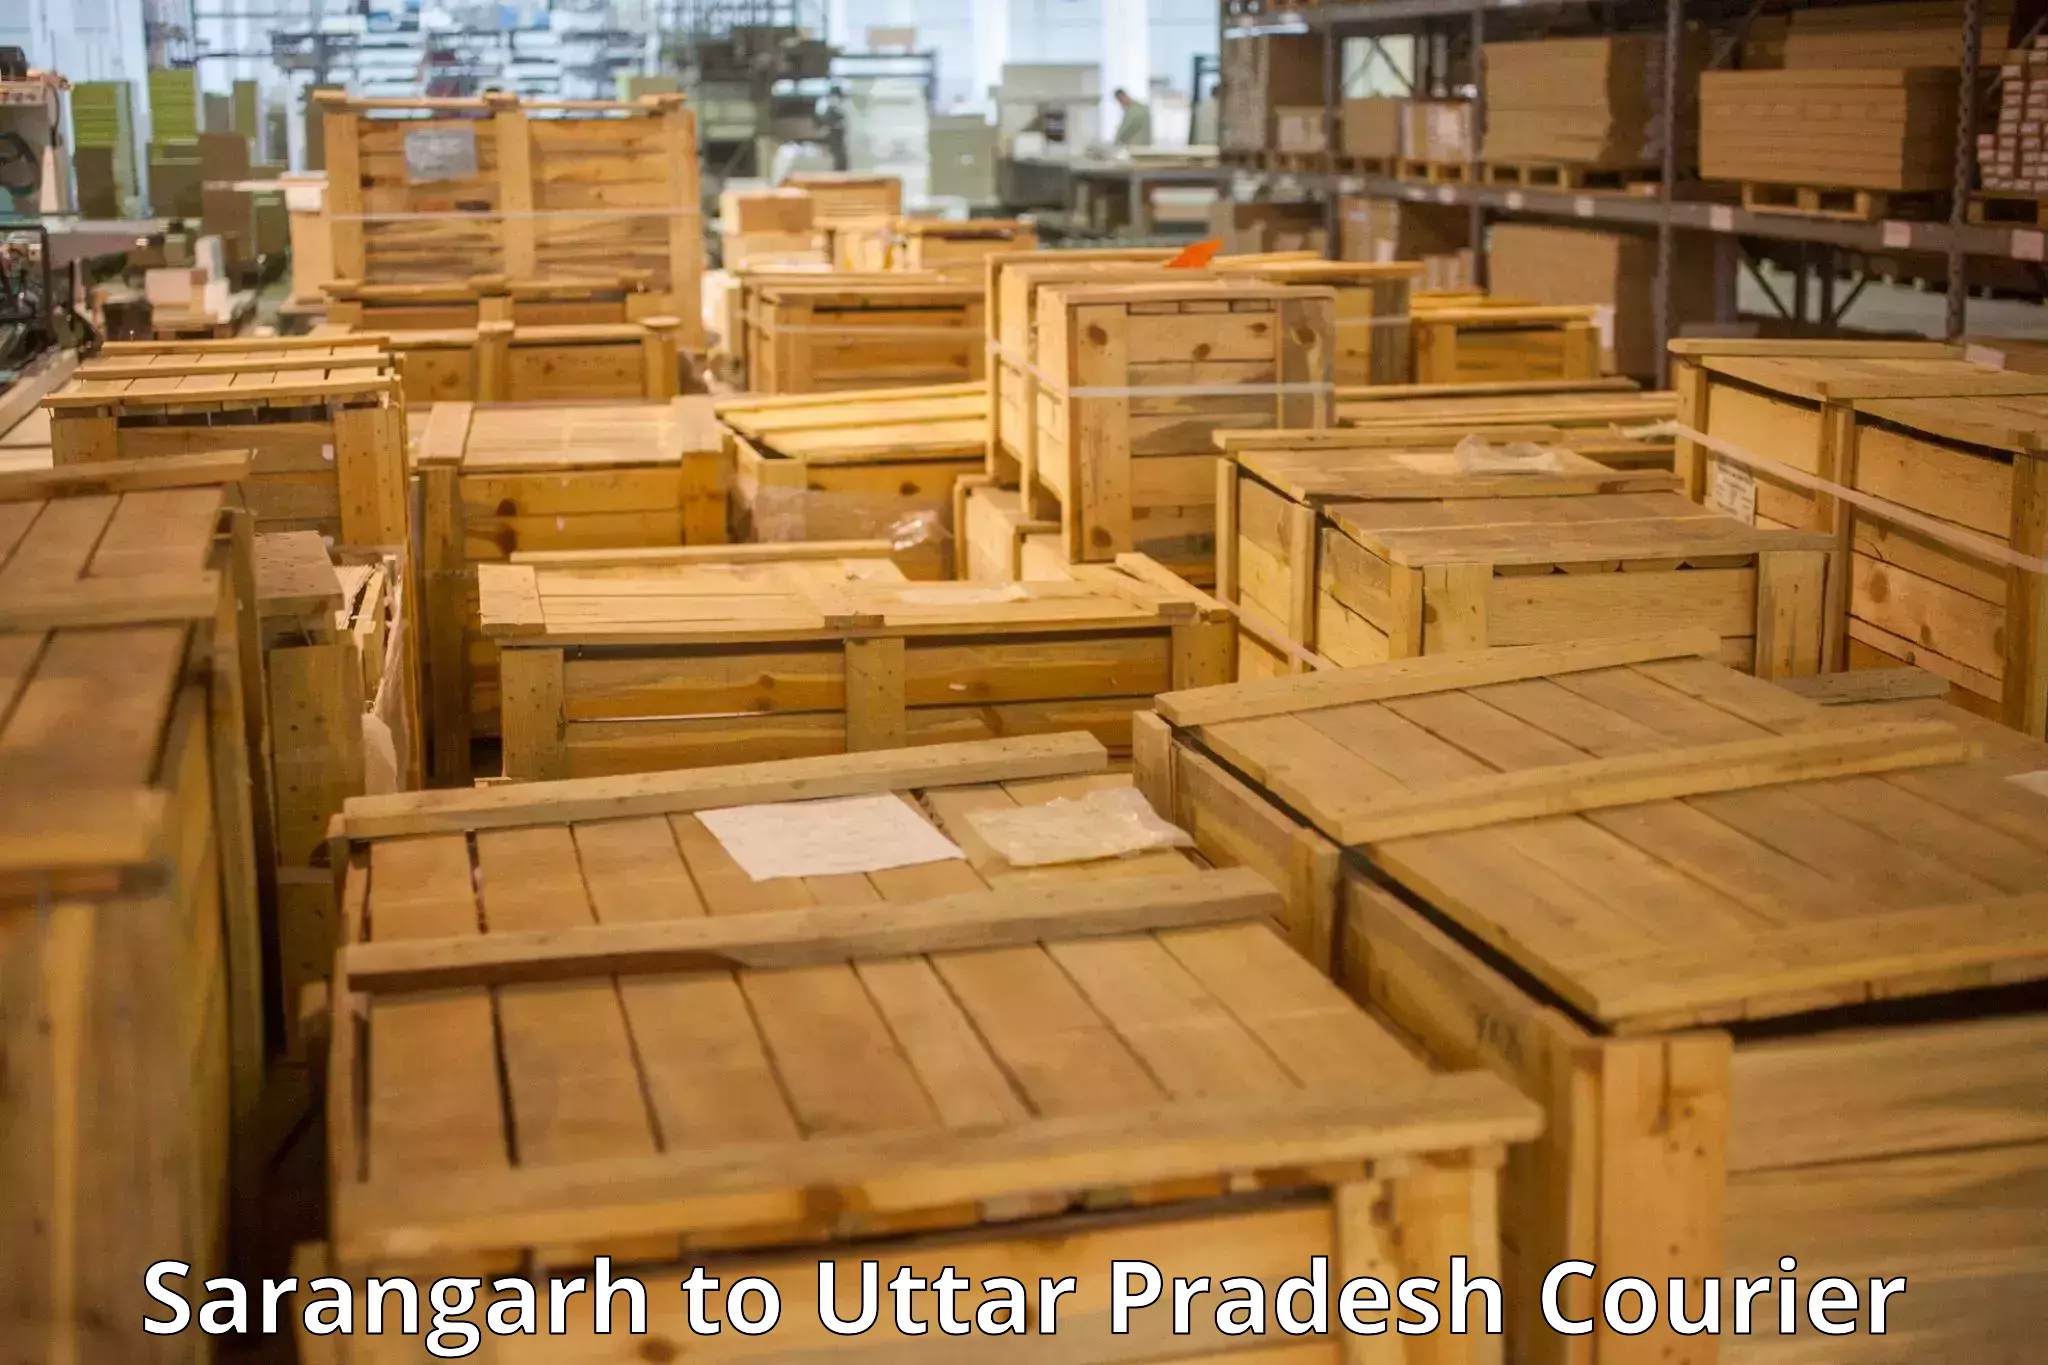 Baggage transport technology Sarangarh to Hamirpur Uttar Pradesh